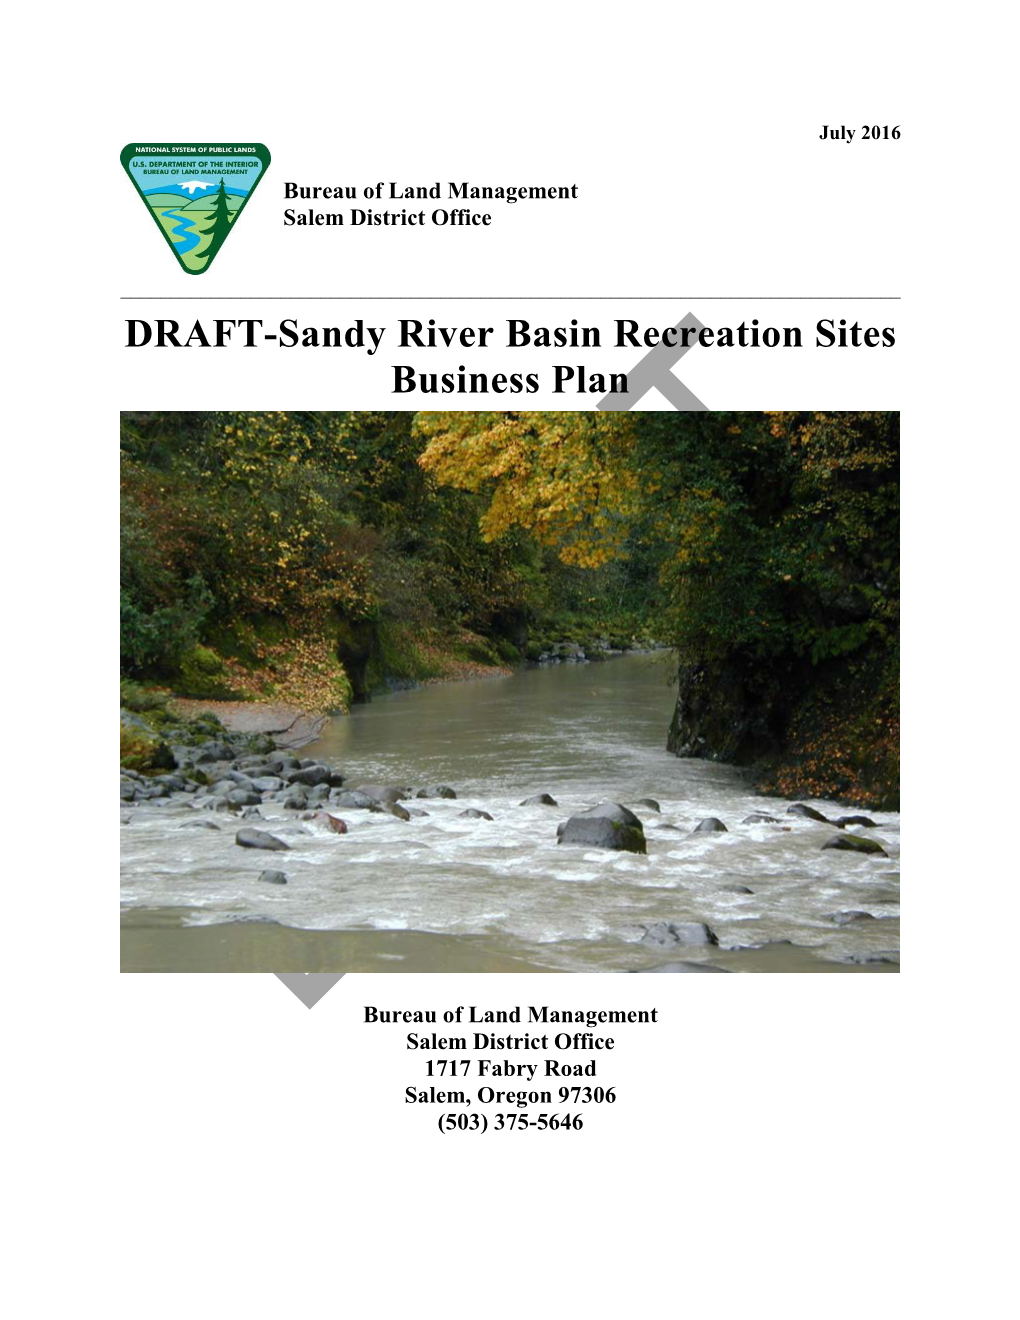 Sandy River Basin Business Plan